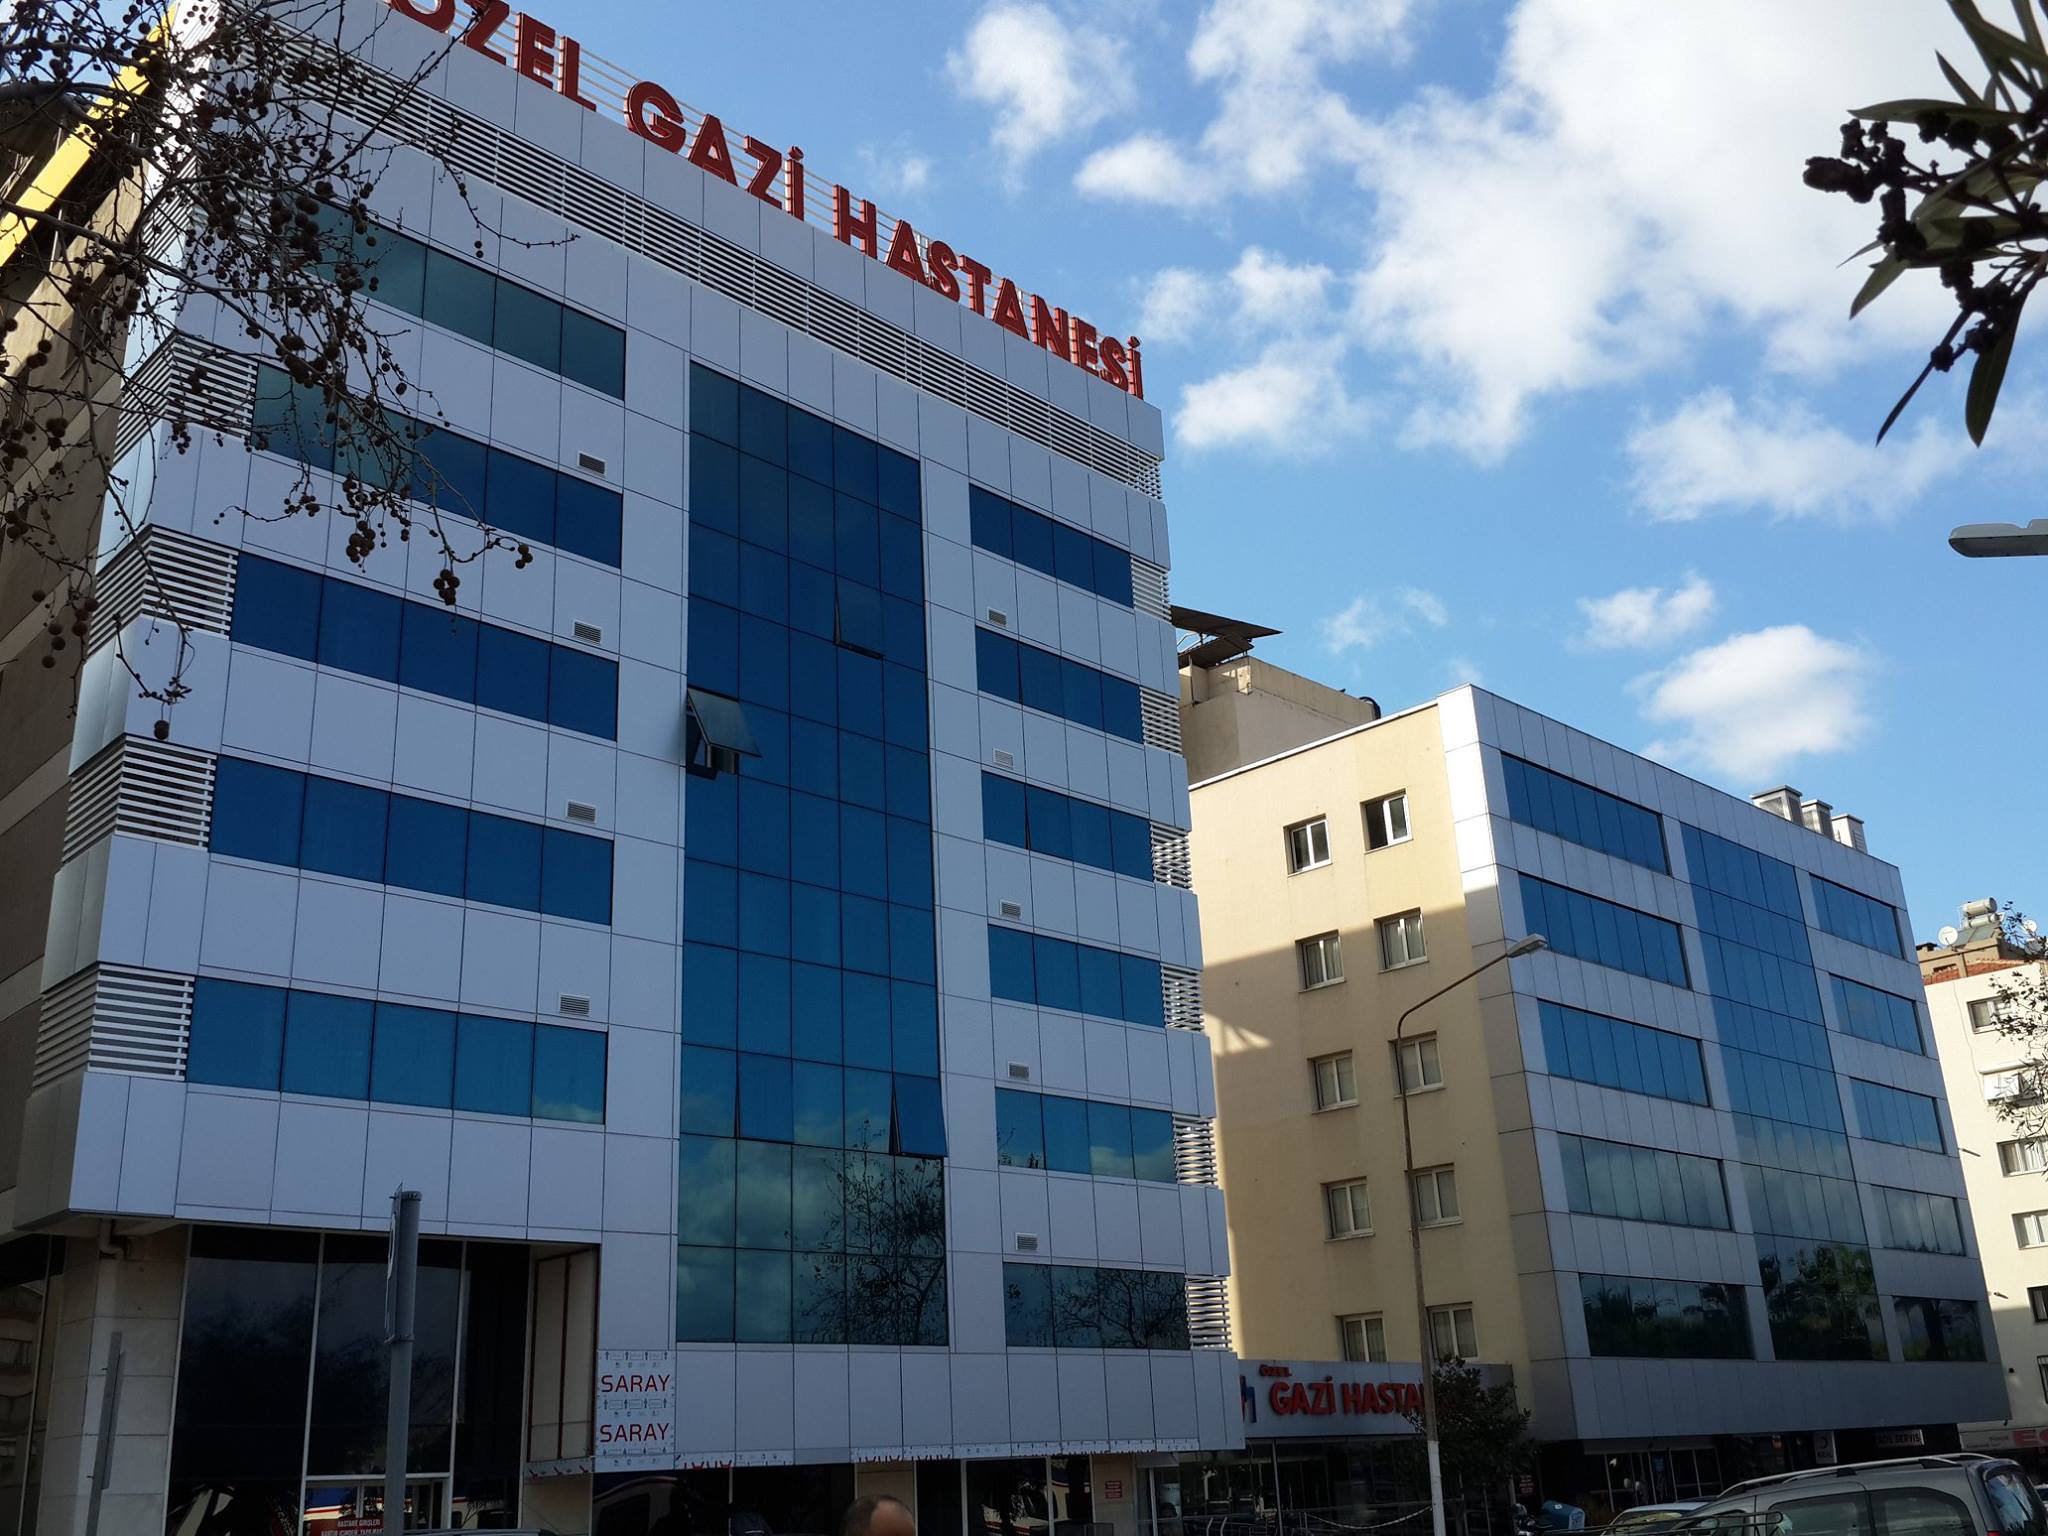 Gazi Hastanesi